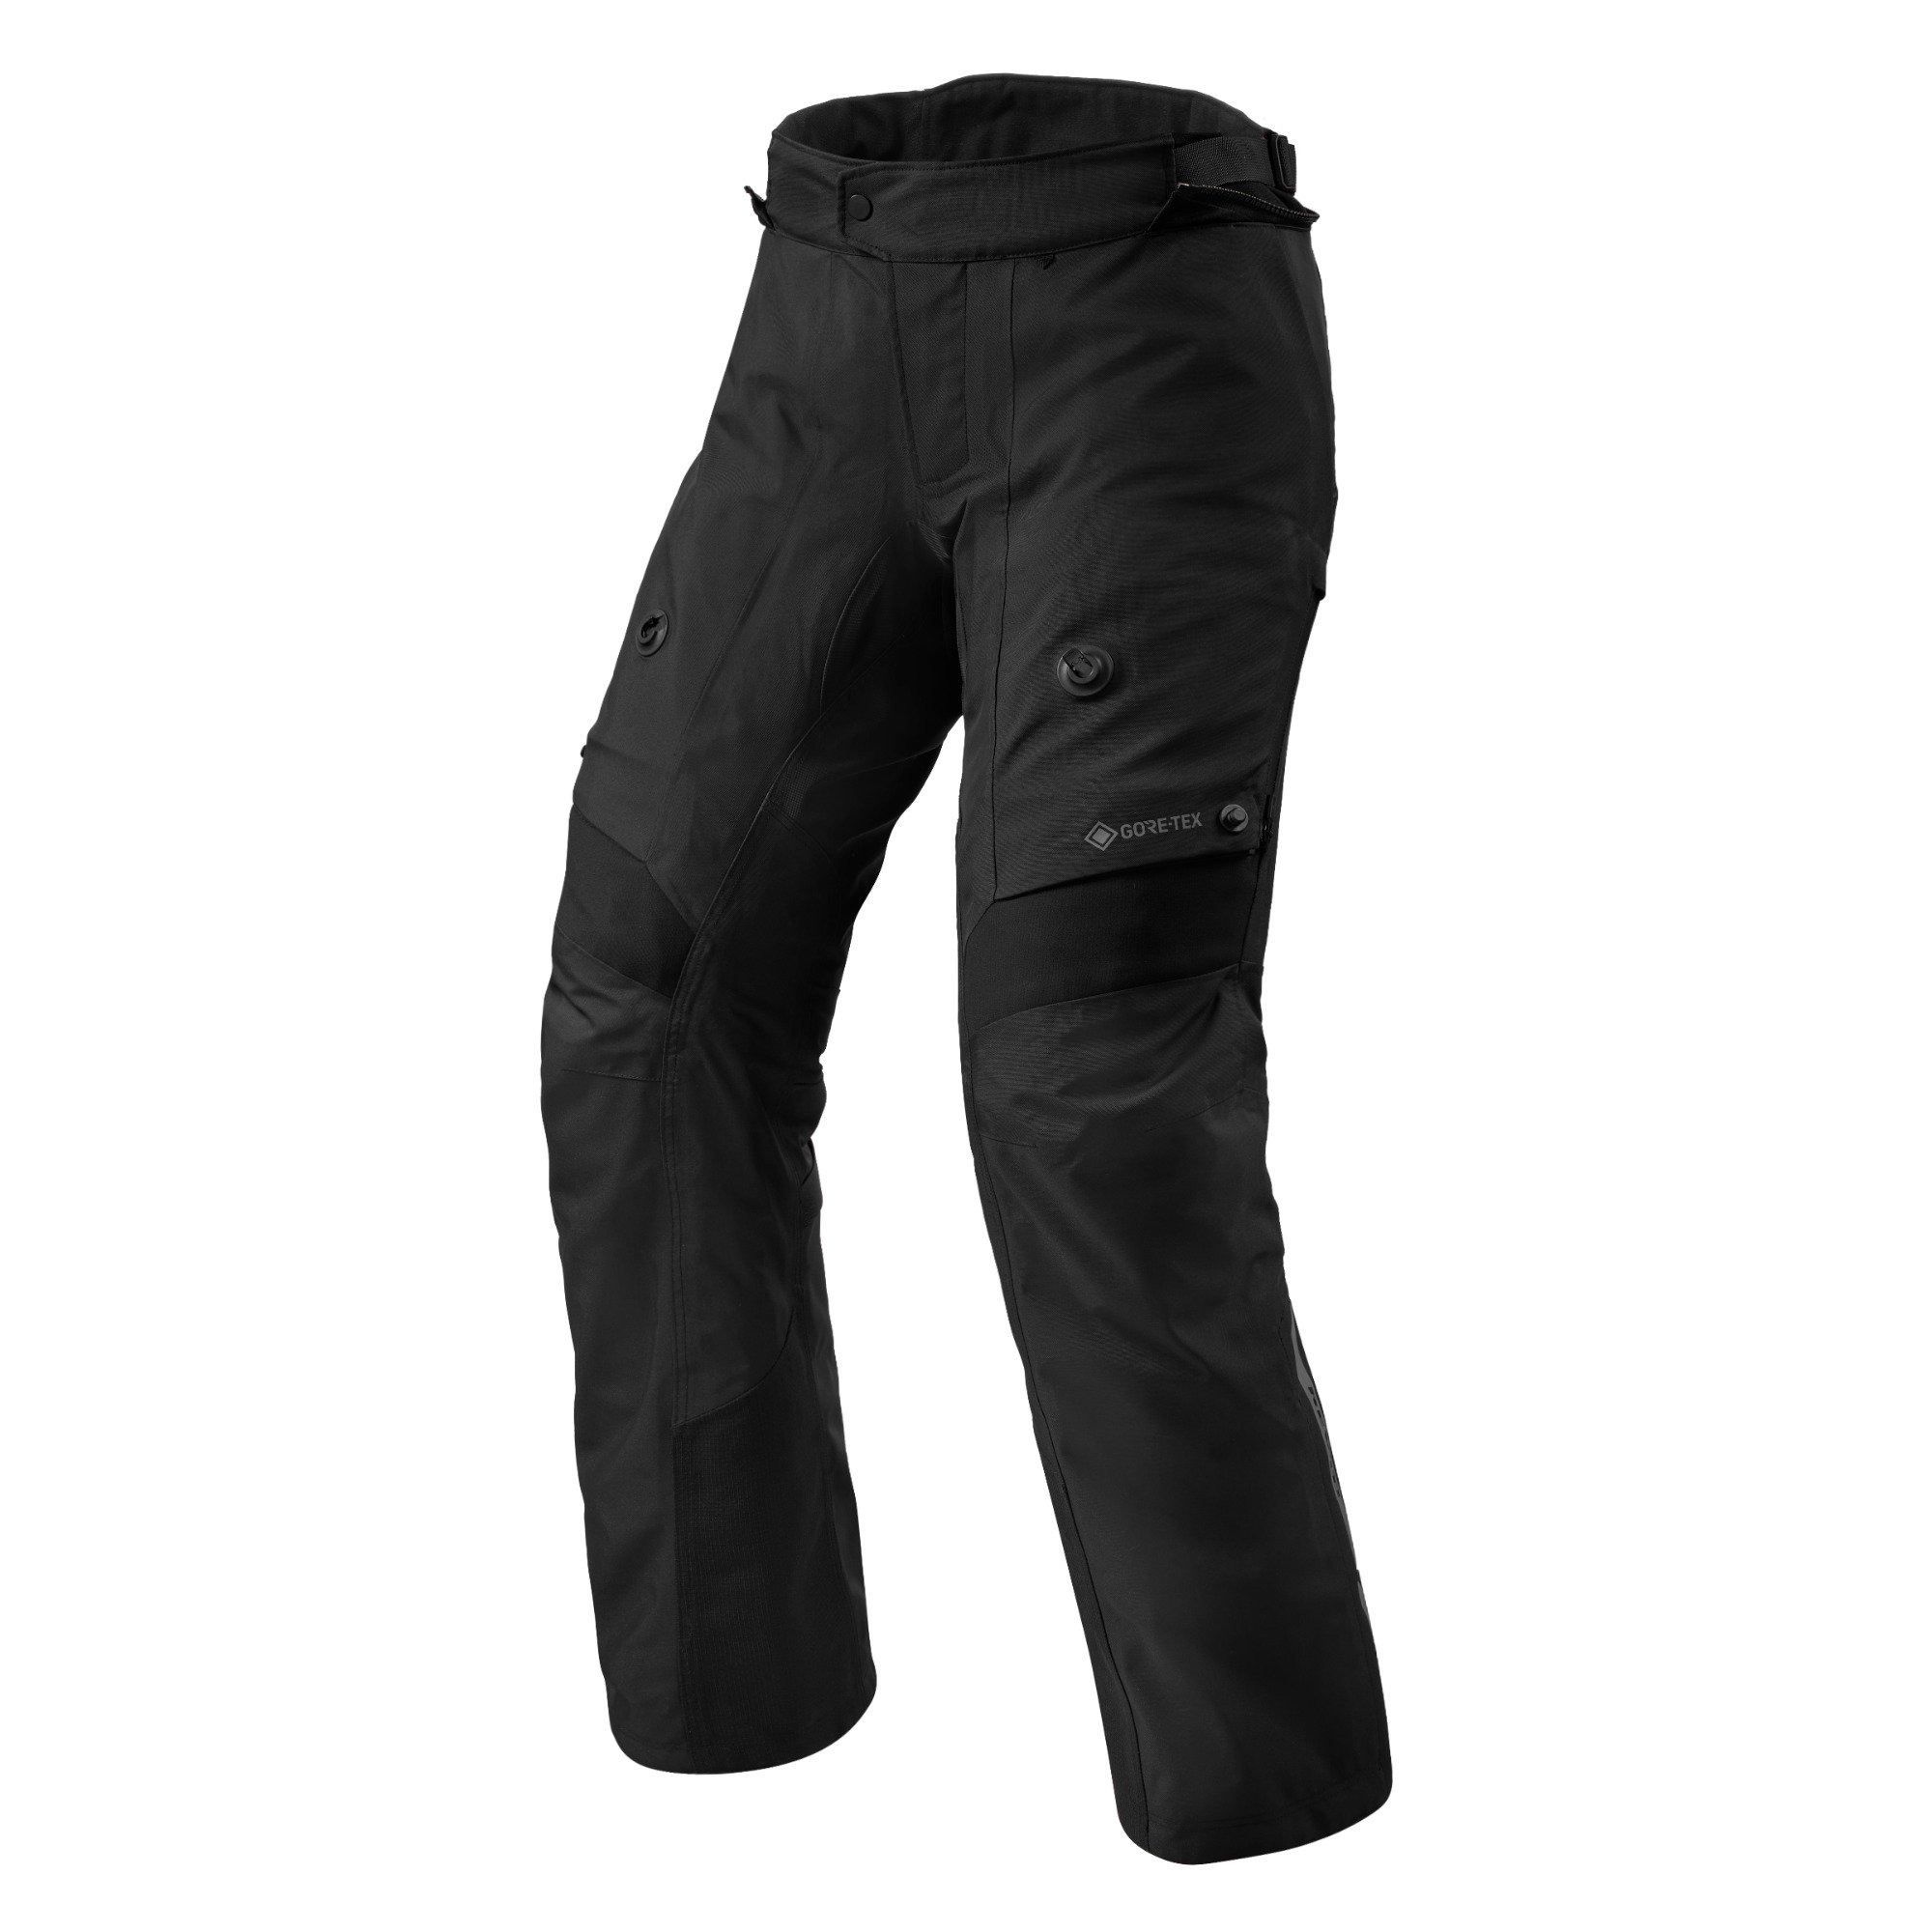 Image of REV'IT! Pants Poseidon 3 GTX Black Standard Motorcycle Pants Size XL ID 8700001362467